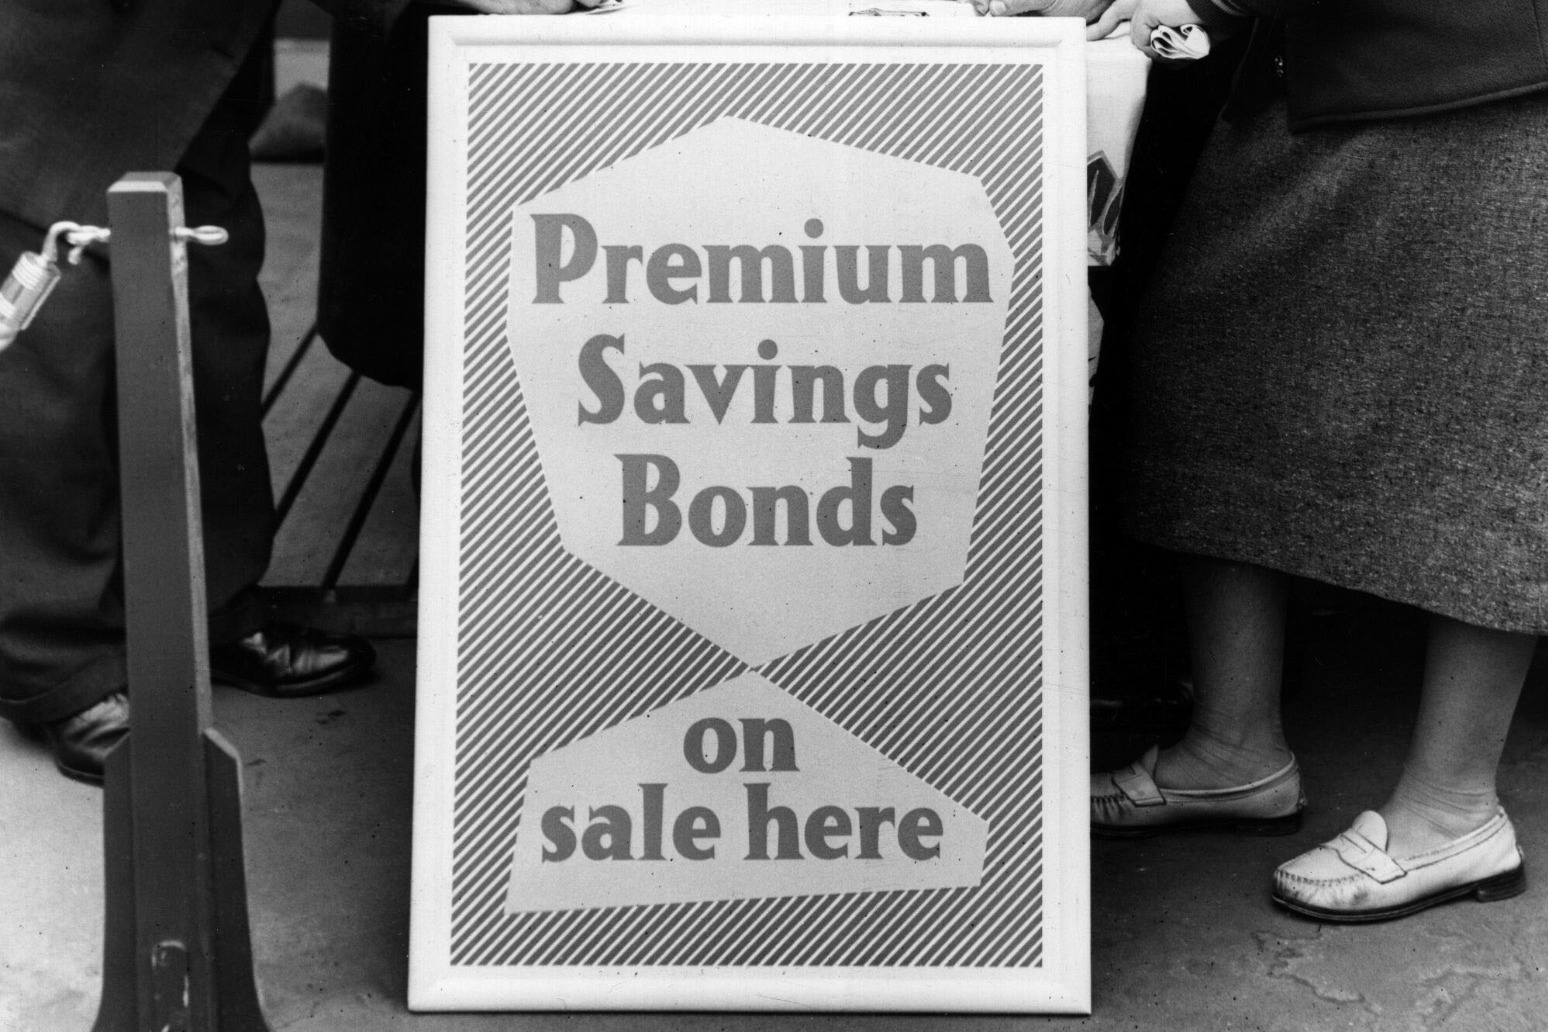 NS&I celebrates 65 years since first Premium Bonds prize draw 